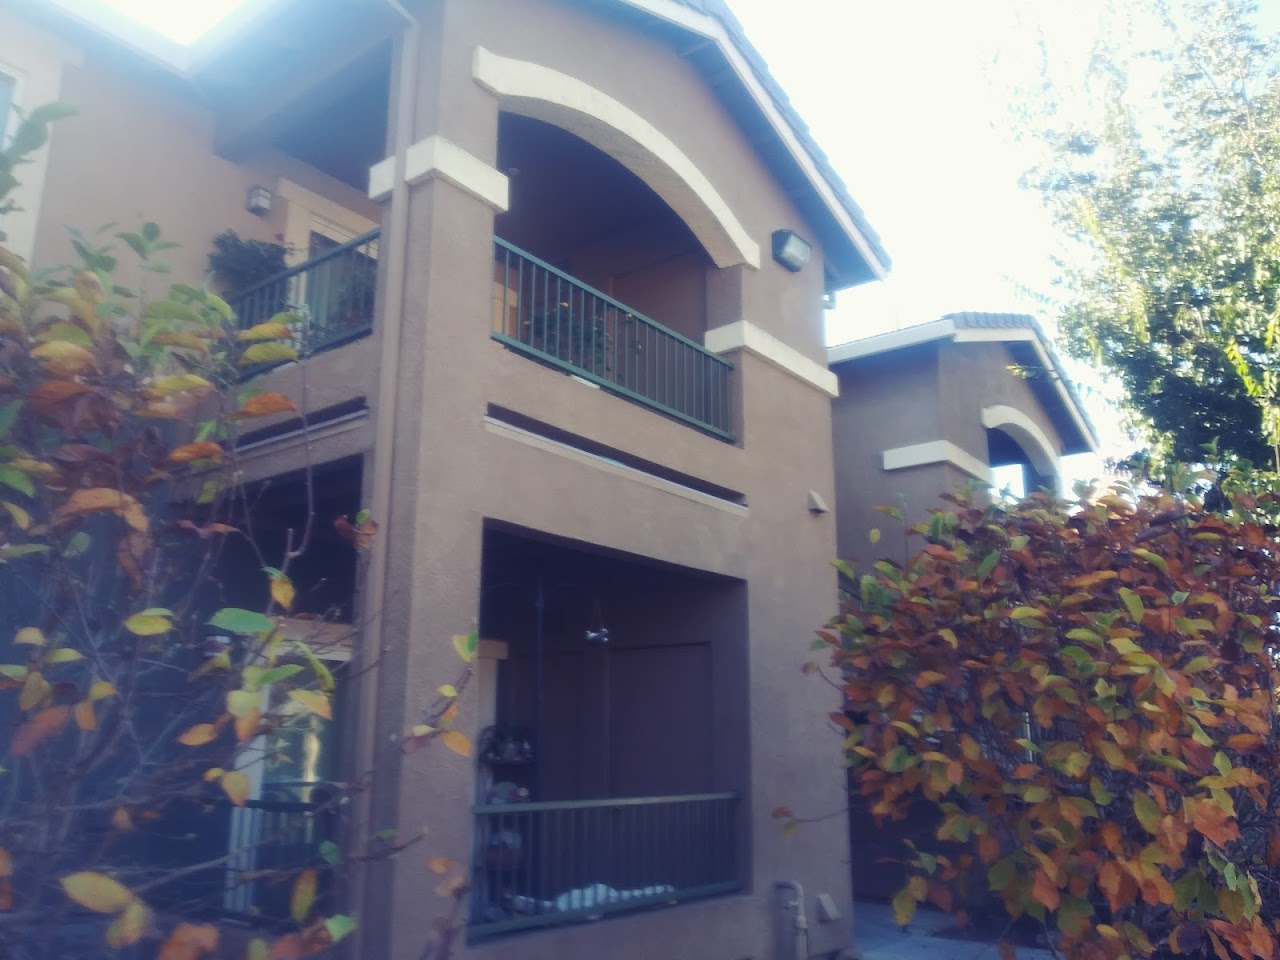 Photo of RIVERS SENIOR APTS. Affordable housing located at 750 DOROTHY ADAMO LN WEST SACRAMENTO, CA 95605